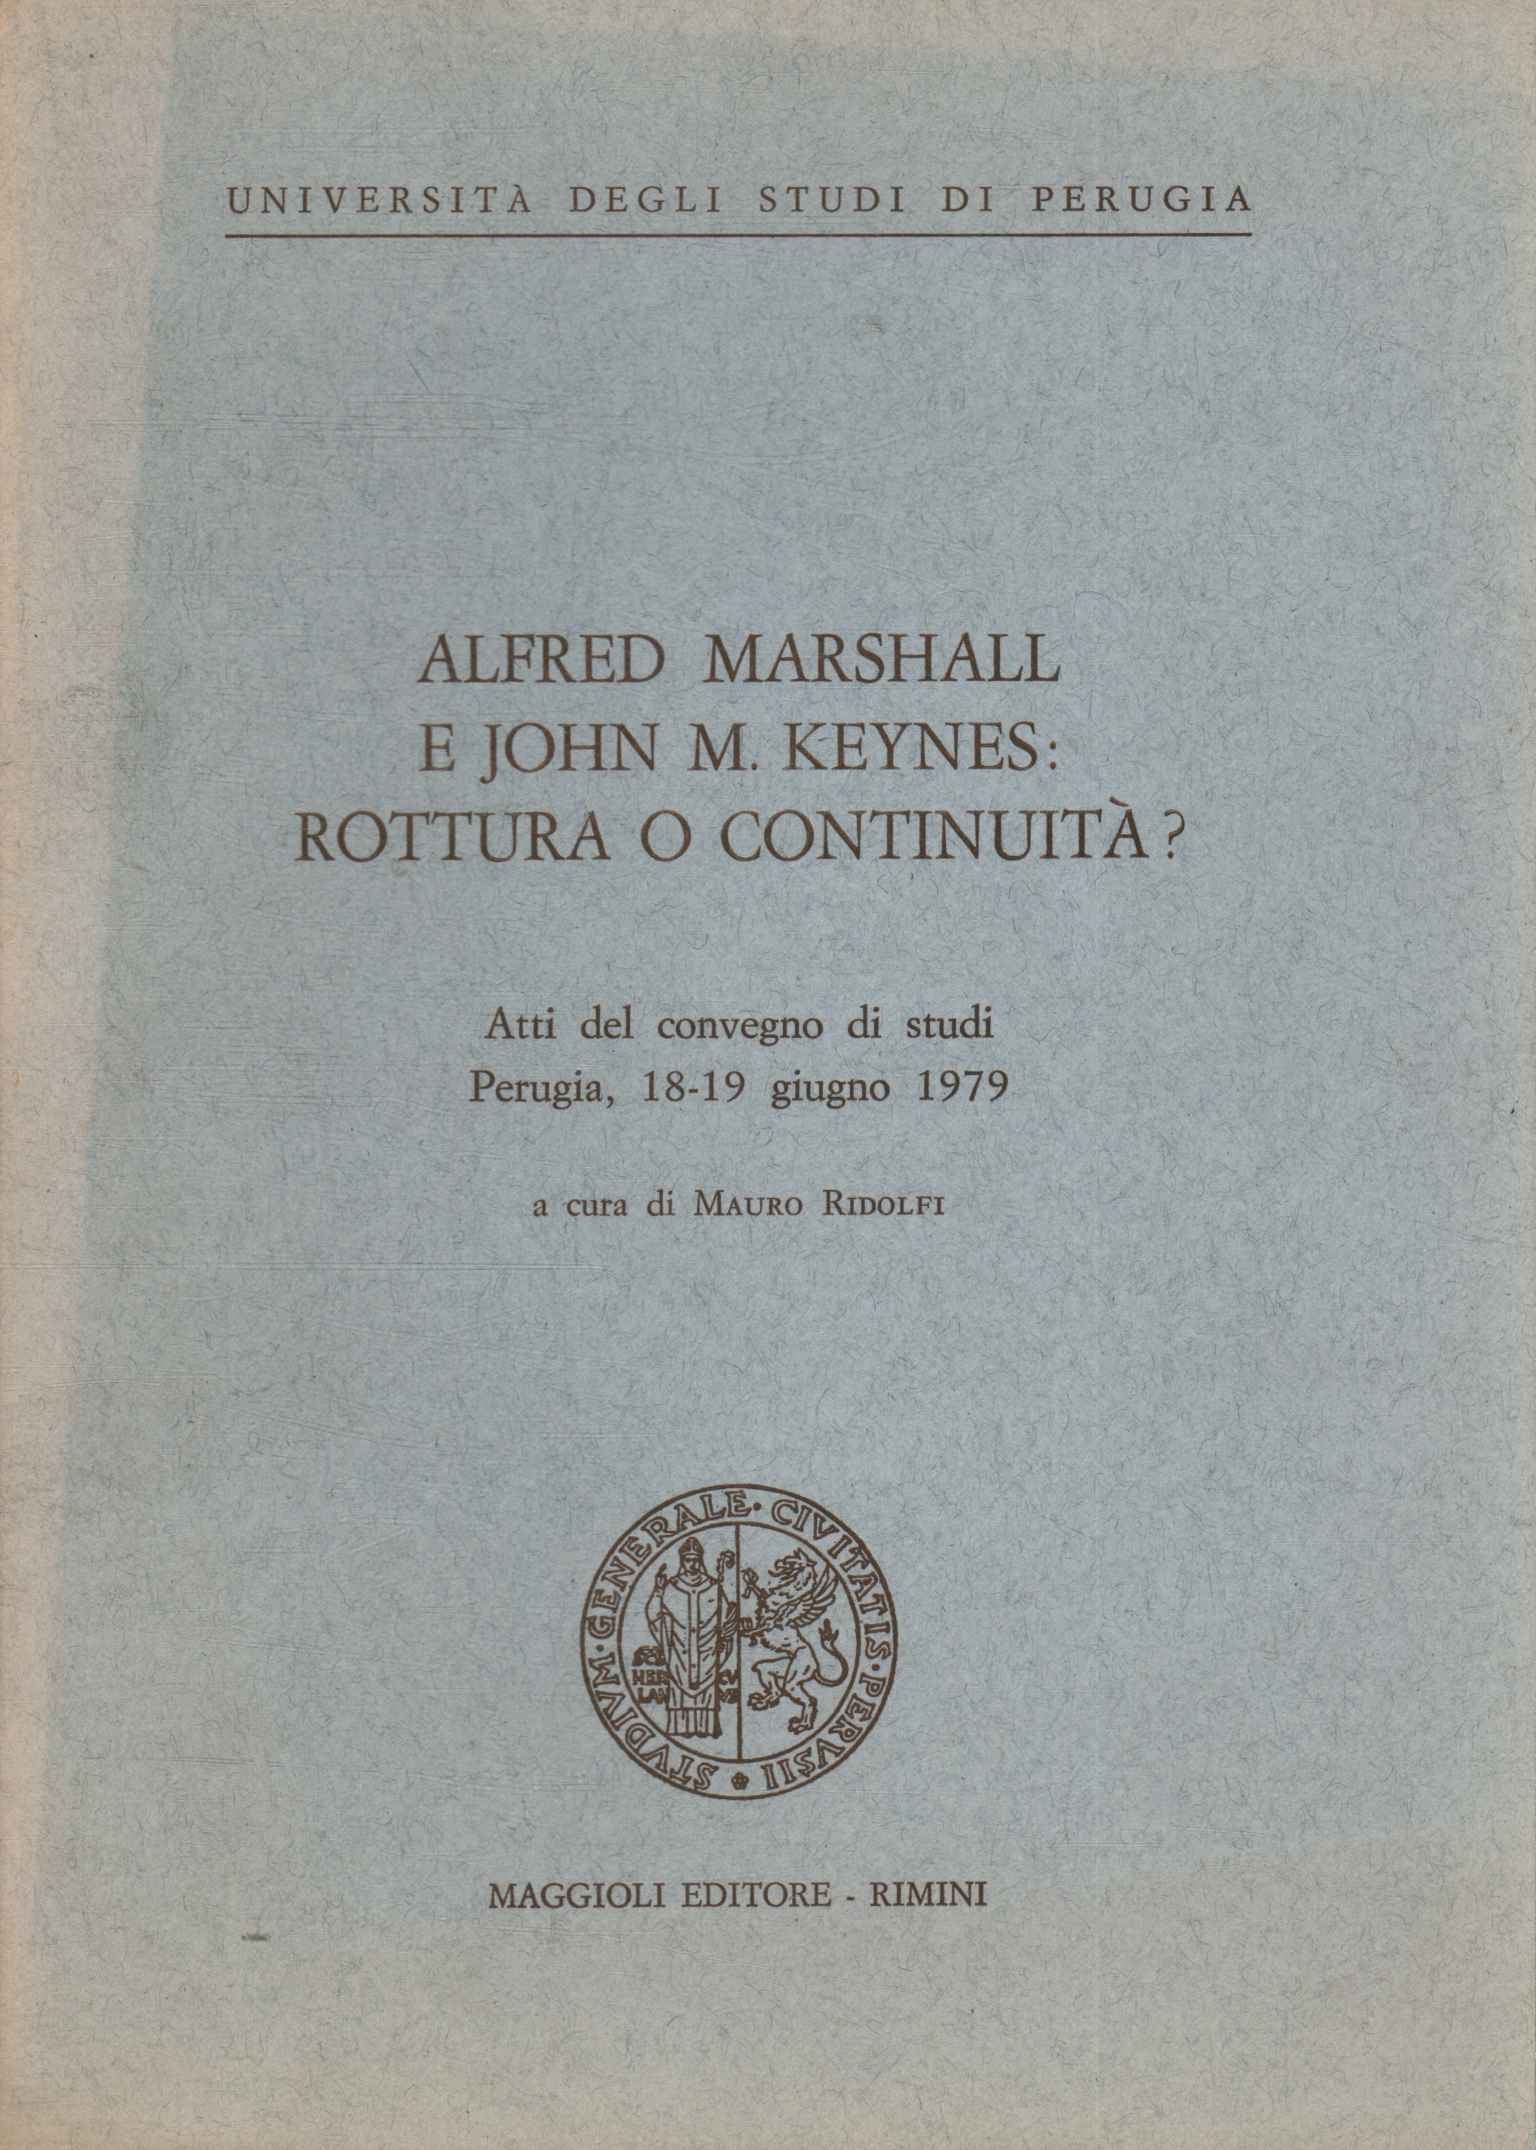 Alfred Marshall y John M. Keynes: ruptura